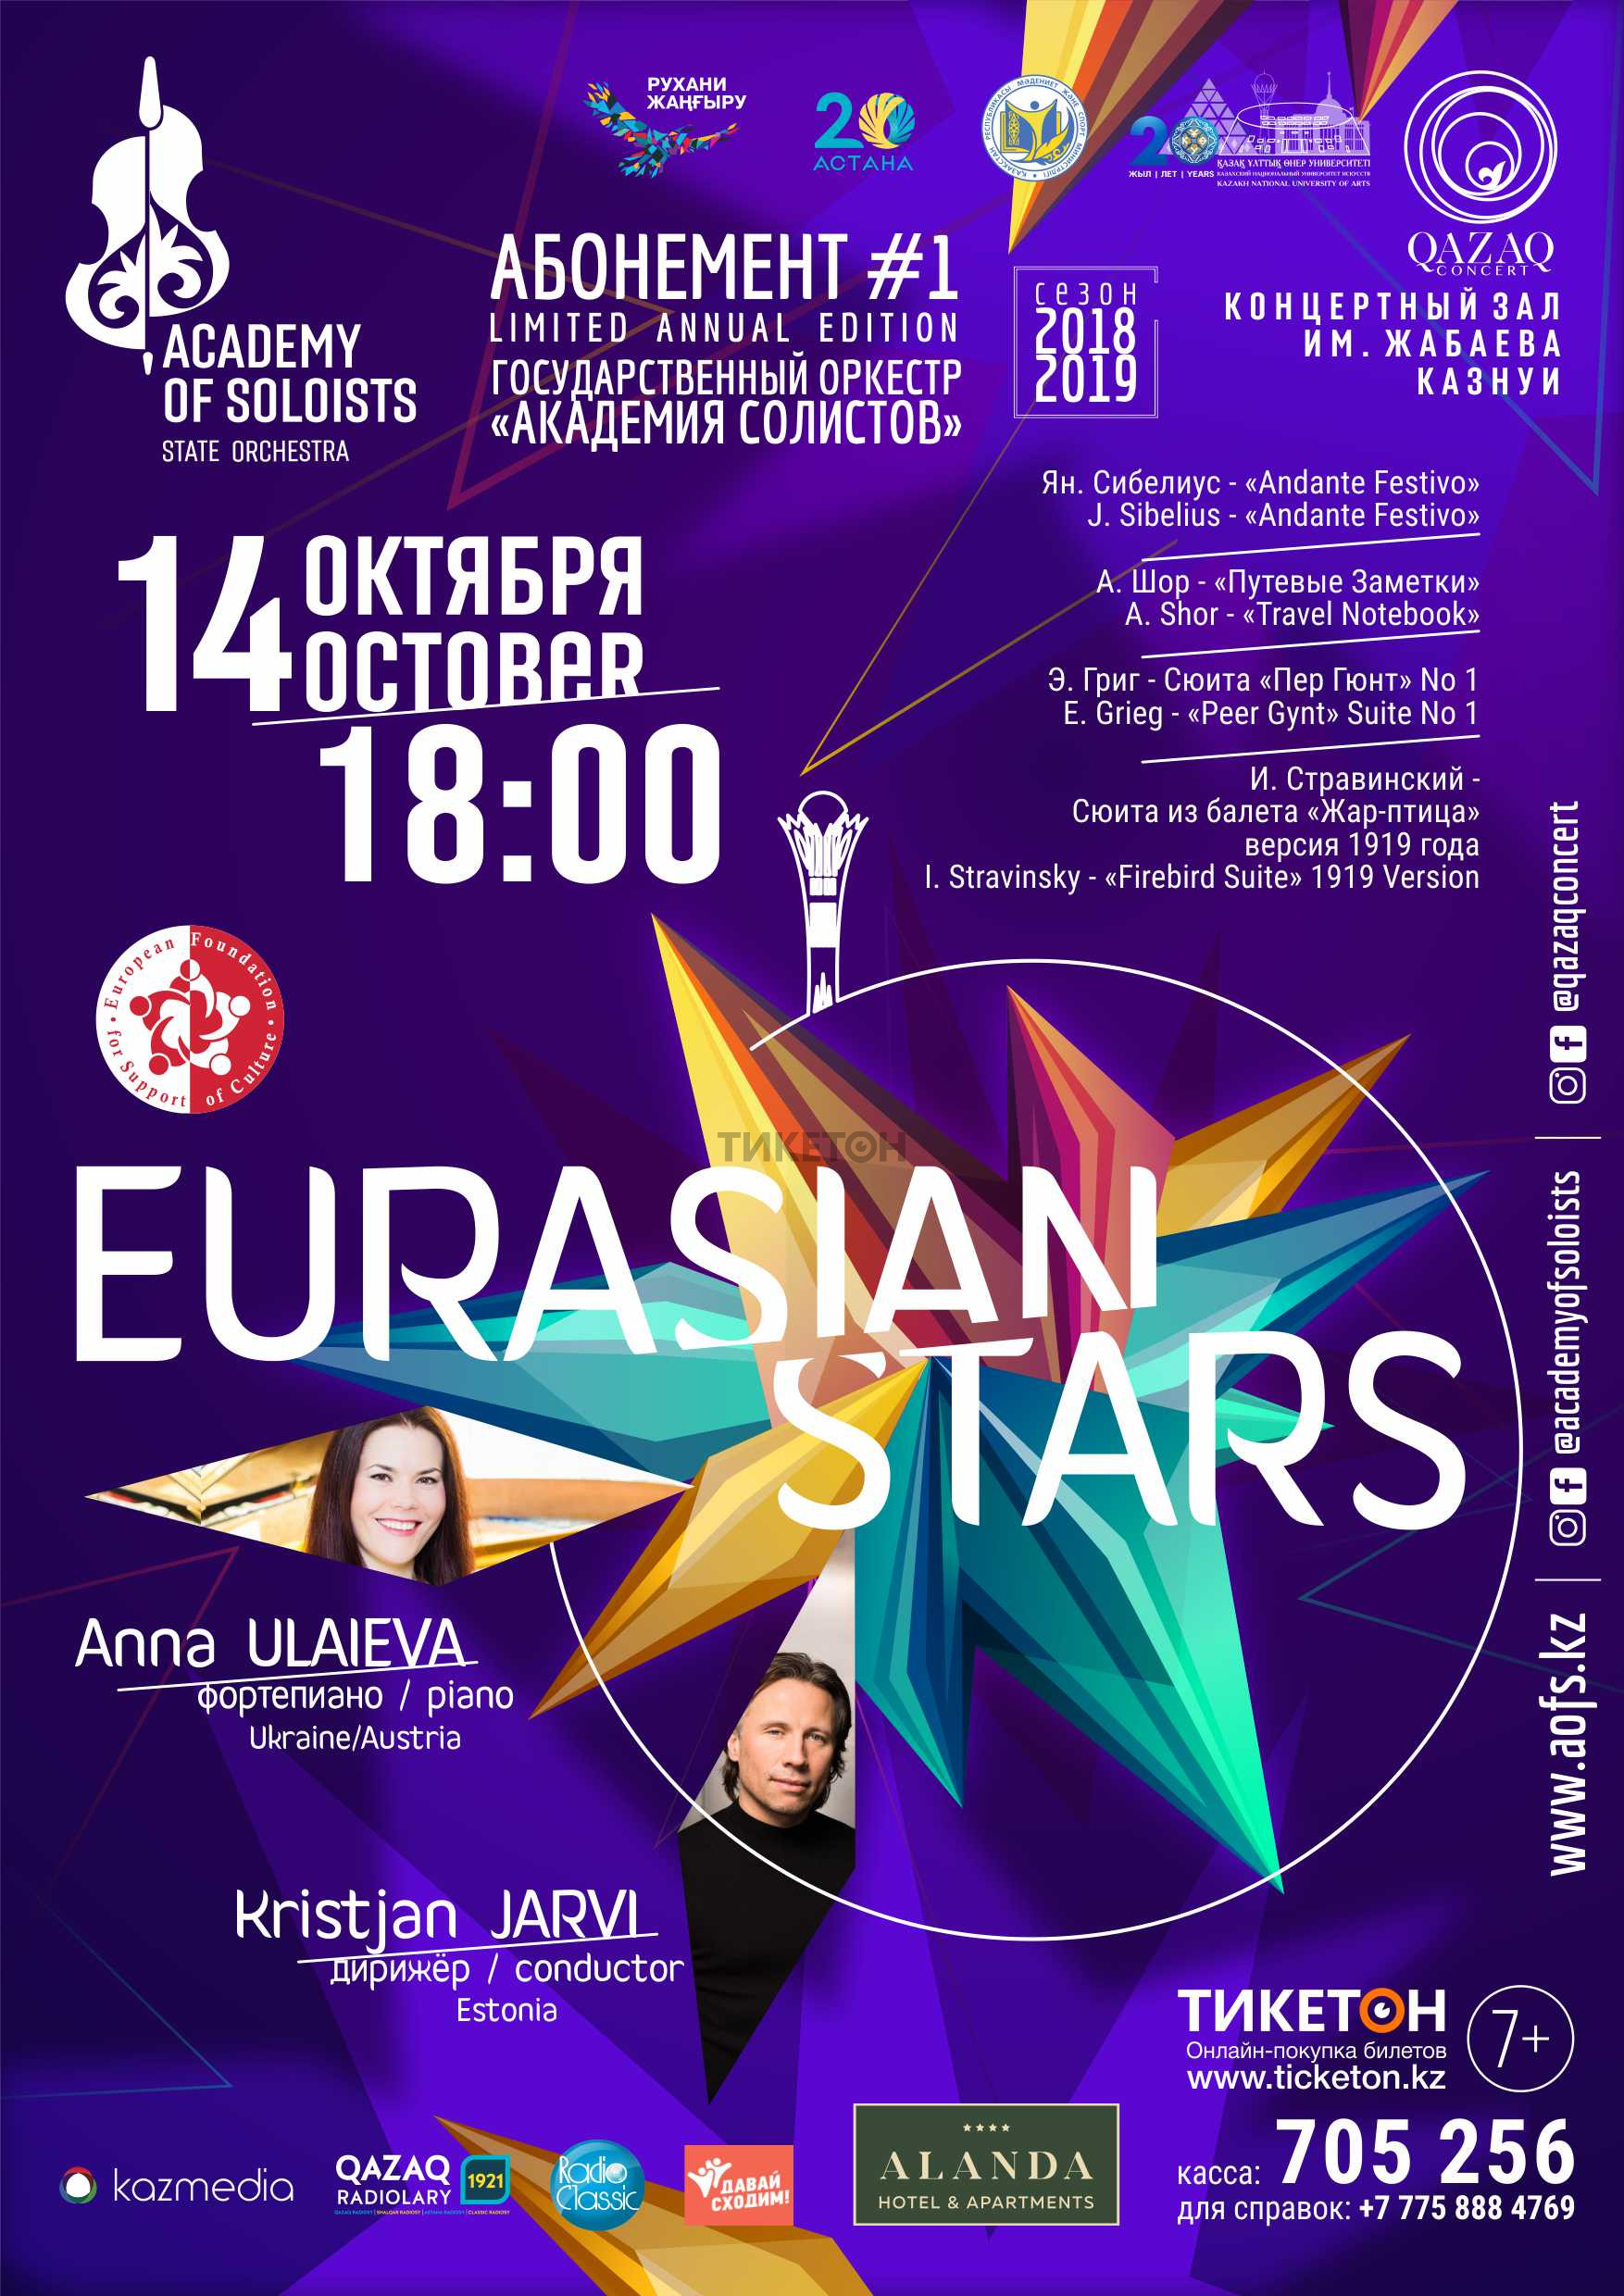  Eurasian stars.14 октября